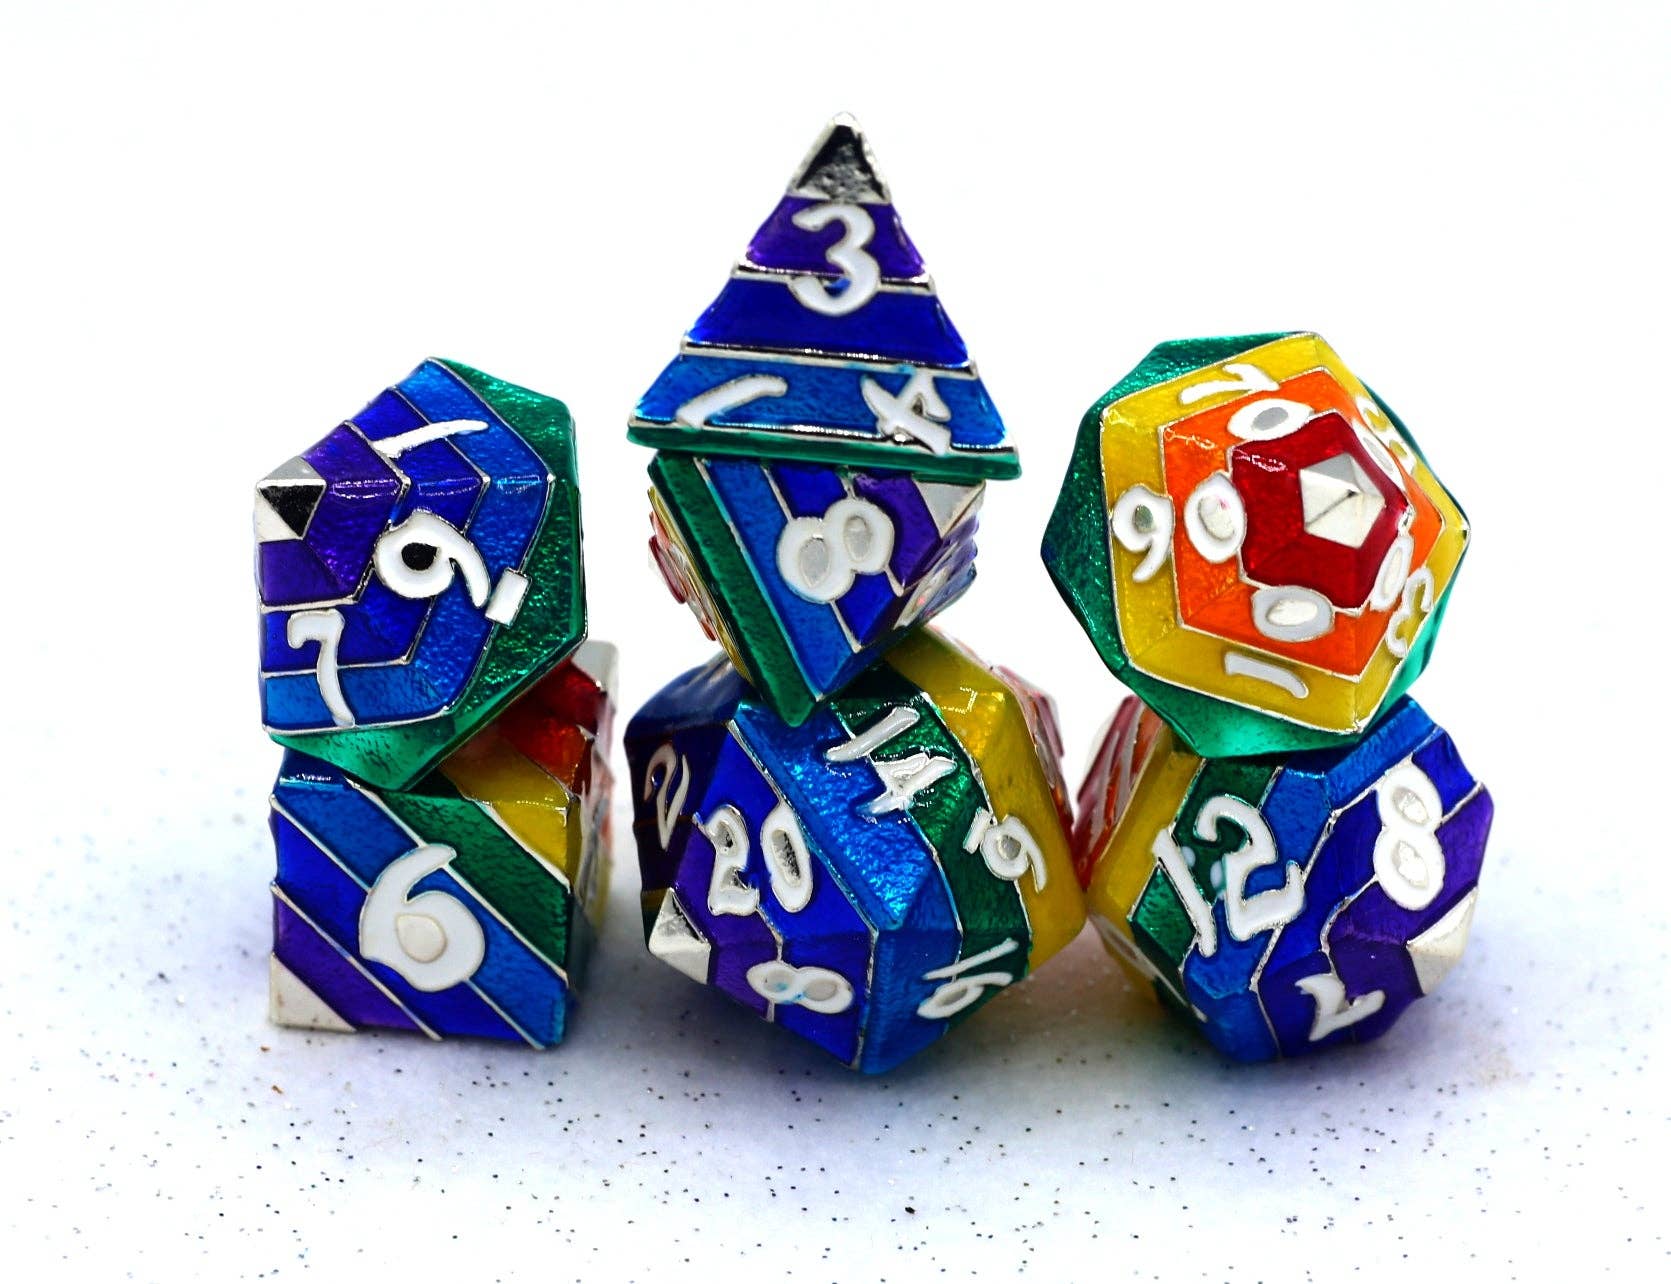 Hymgho Premium Dice - Rainbow Pride solid metal dice set - Silver with White